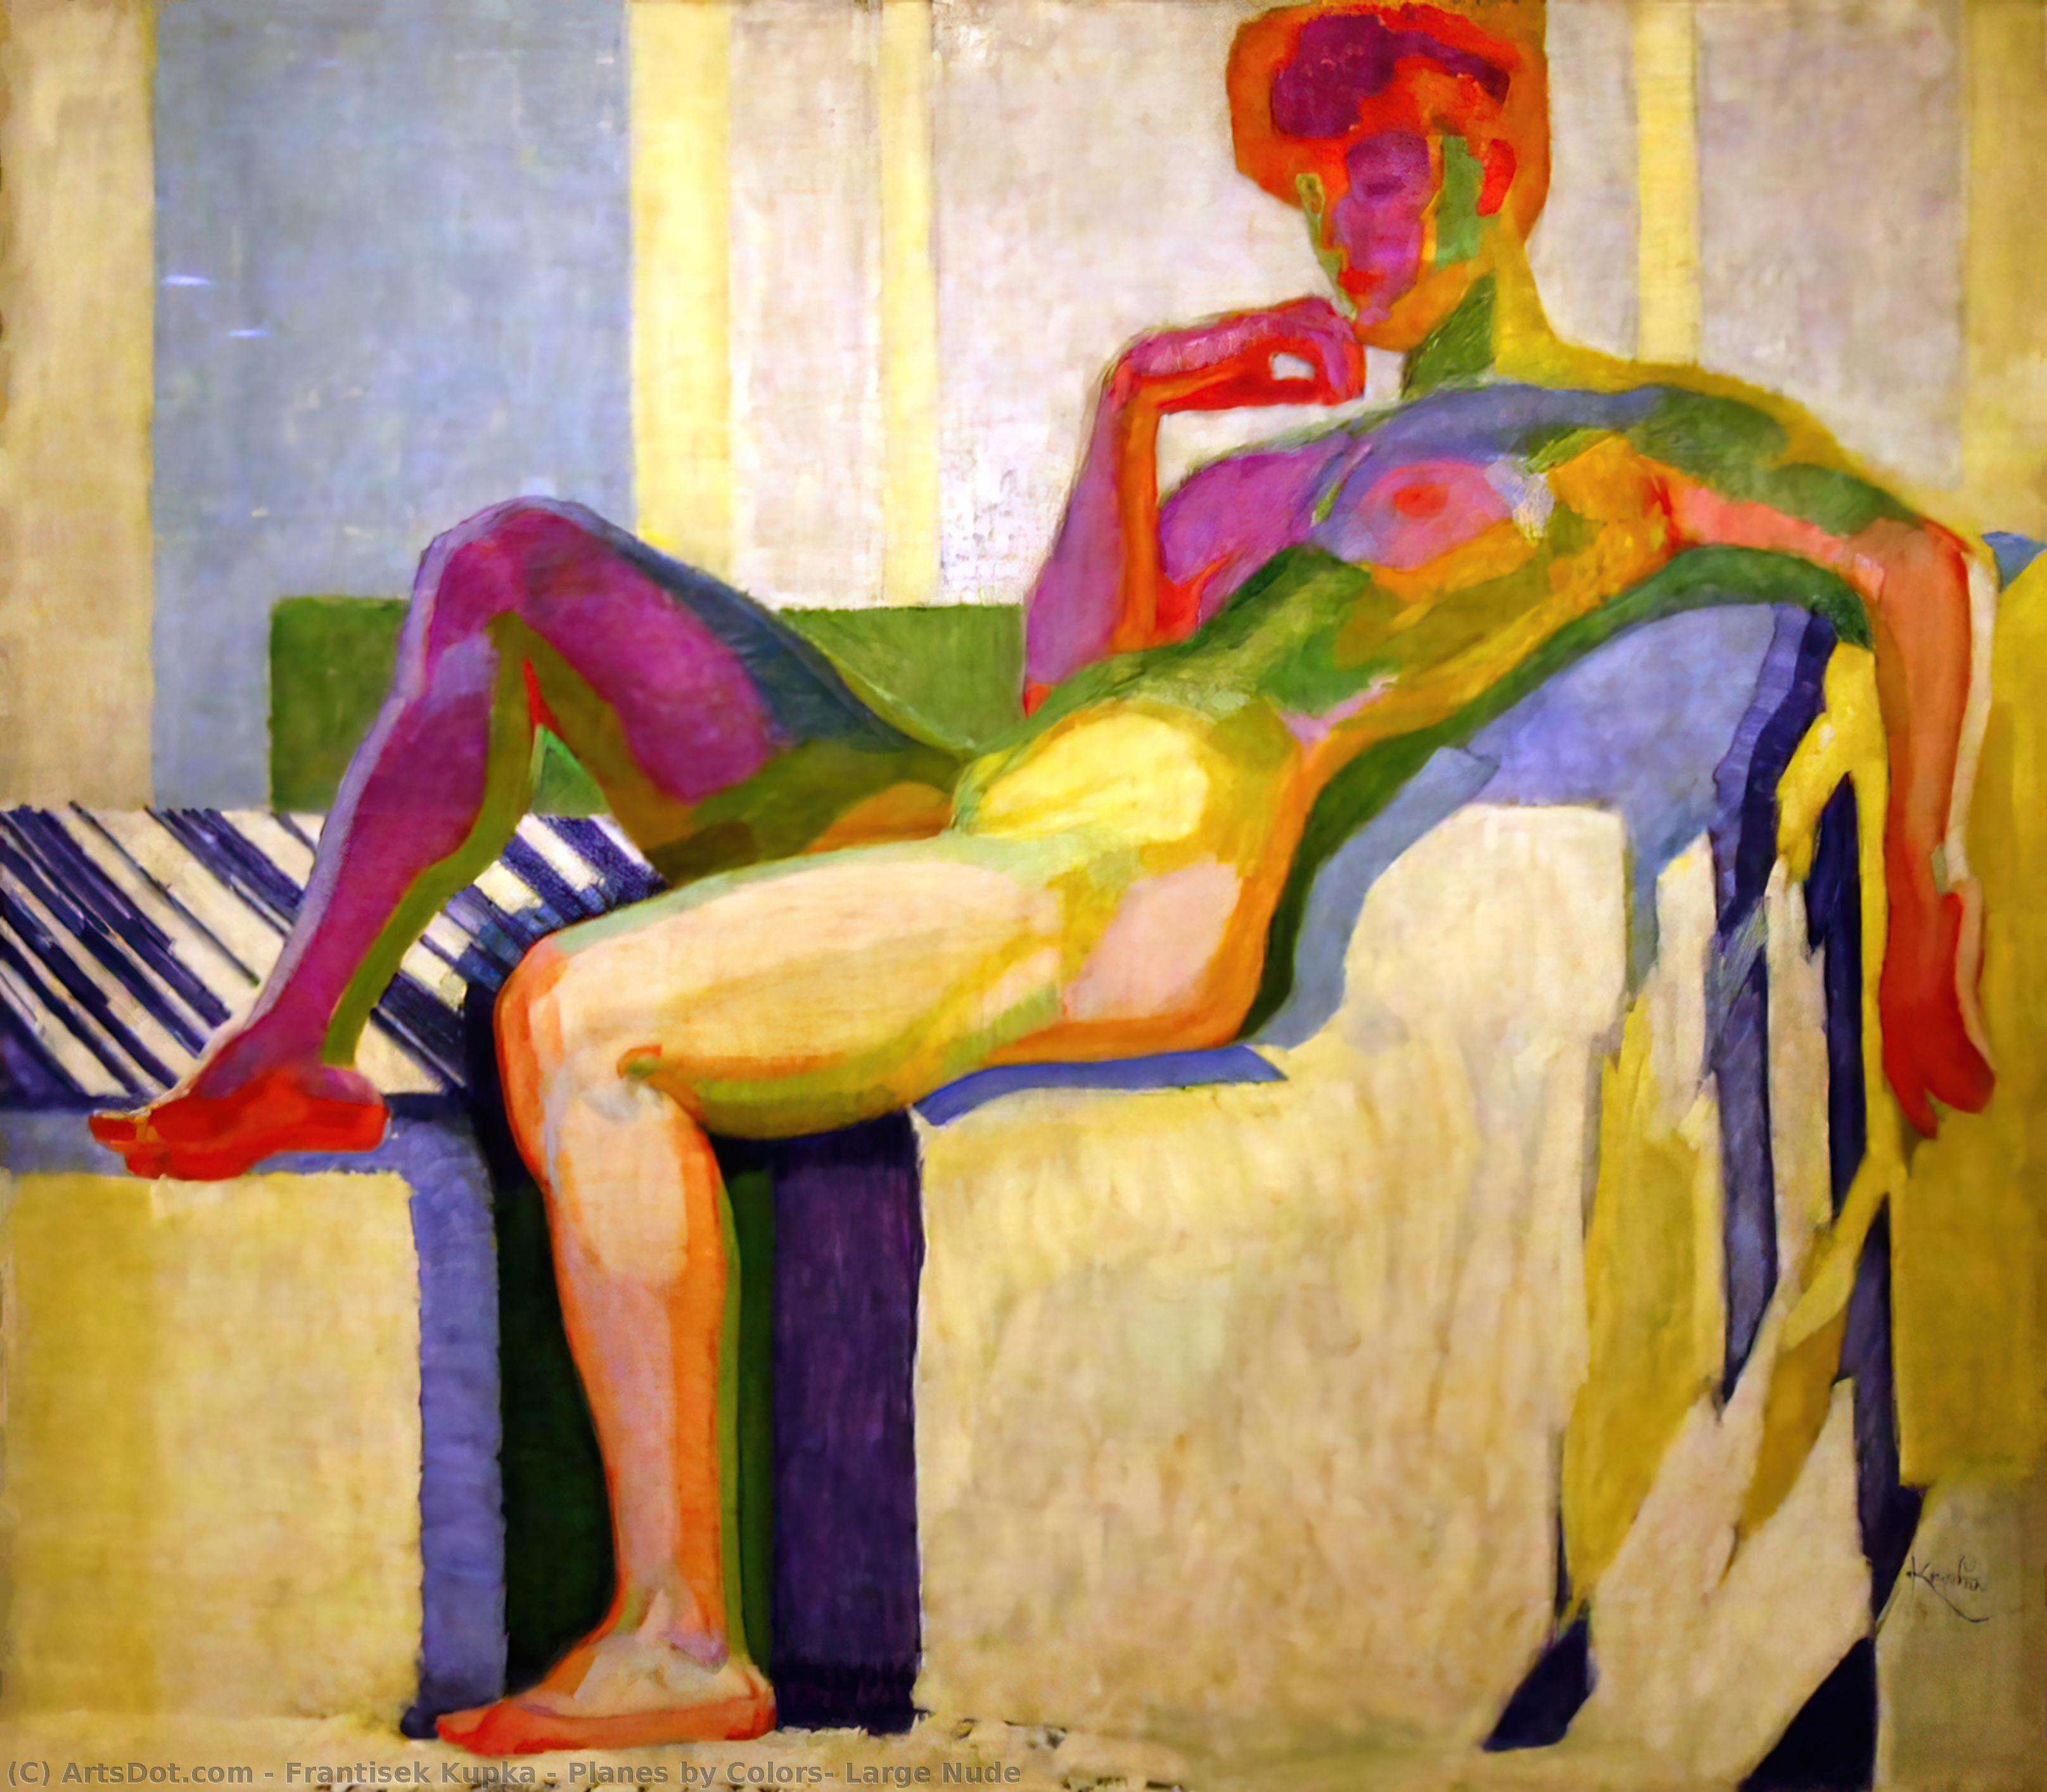 WikiOO.org - Encyclopedia of Fine Arts - Maleri, Artwork Frantisek Kupka - Planes by Colors, Large Nude